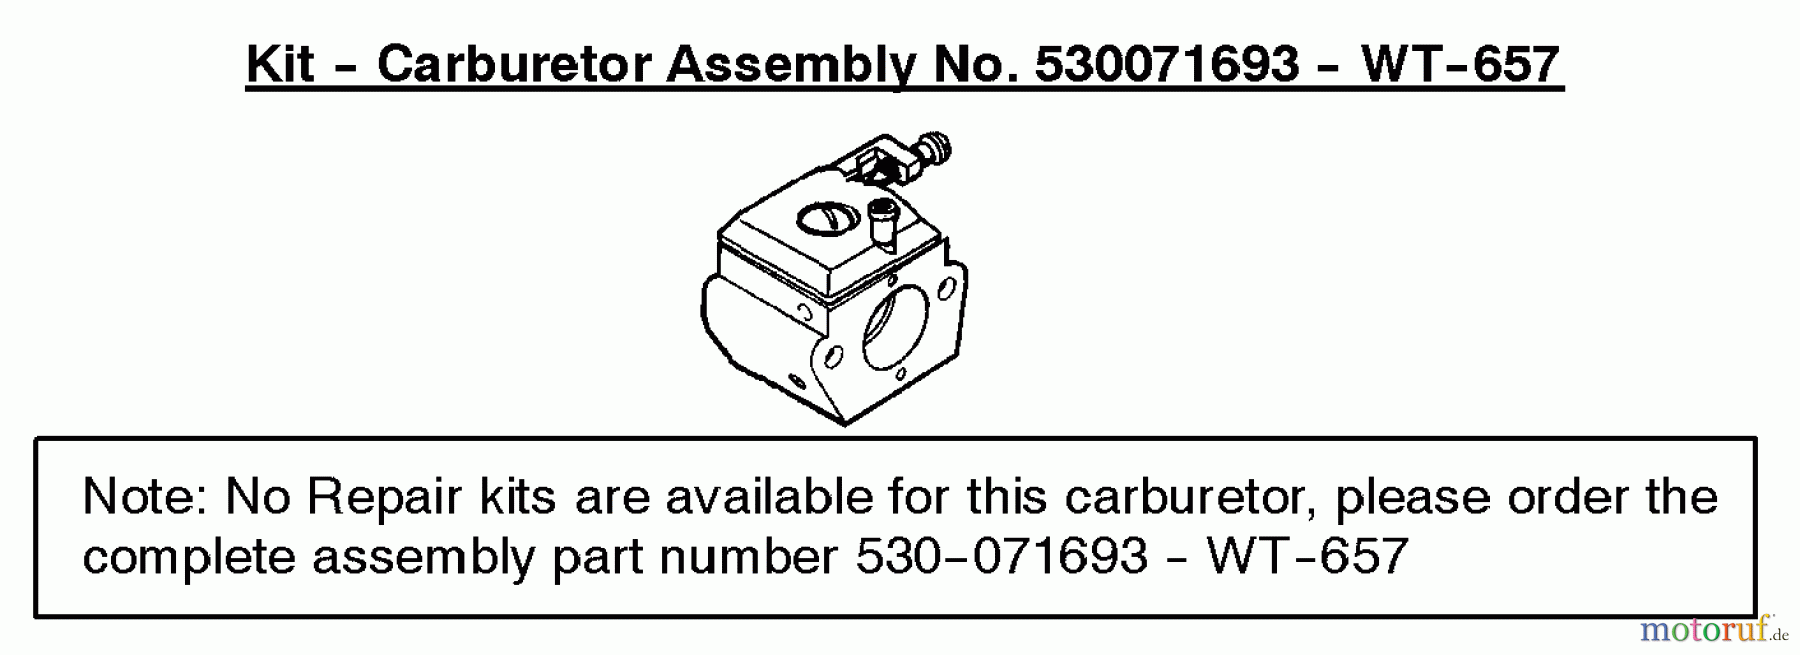  Poulan / Weed Eater Motorsägen PP295 (Type 3) - Poulan Pro Chainsaw Carburetor Assembly Kit - (WT-657) 530071693